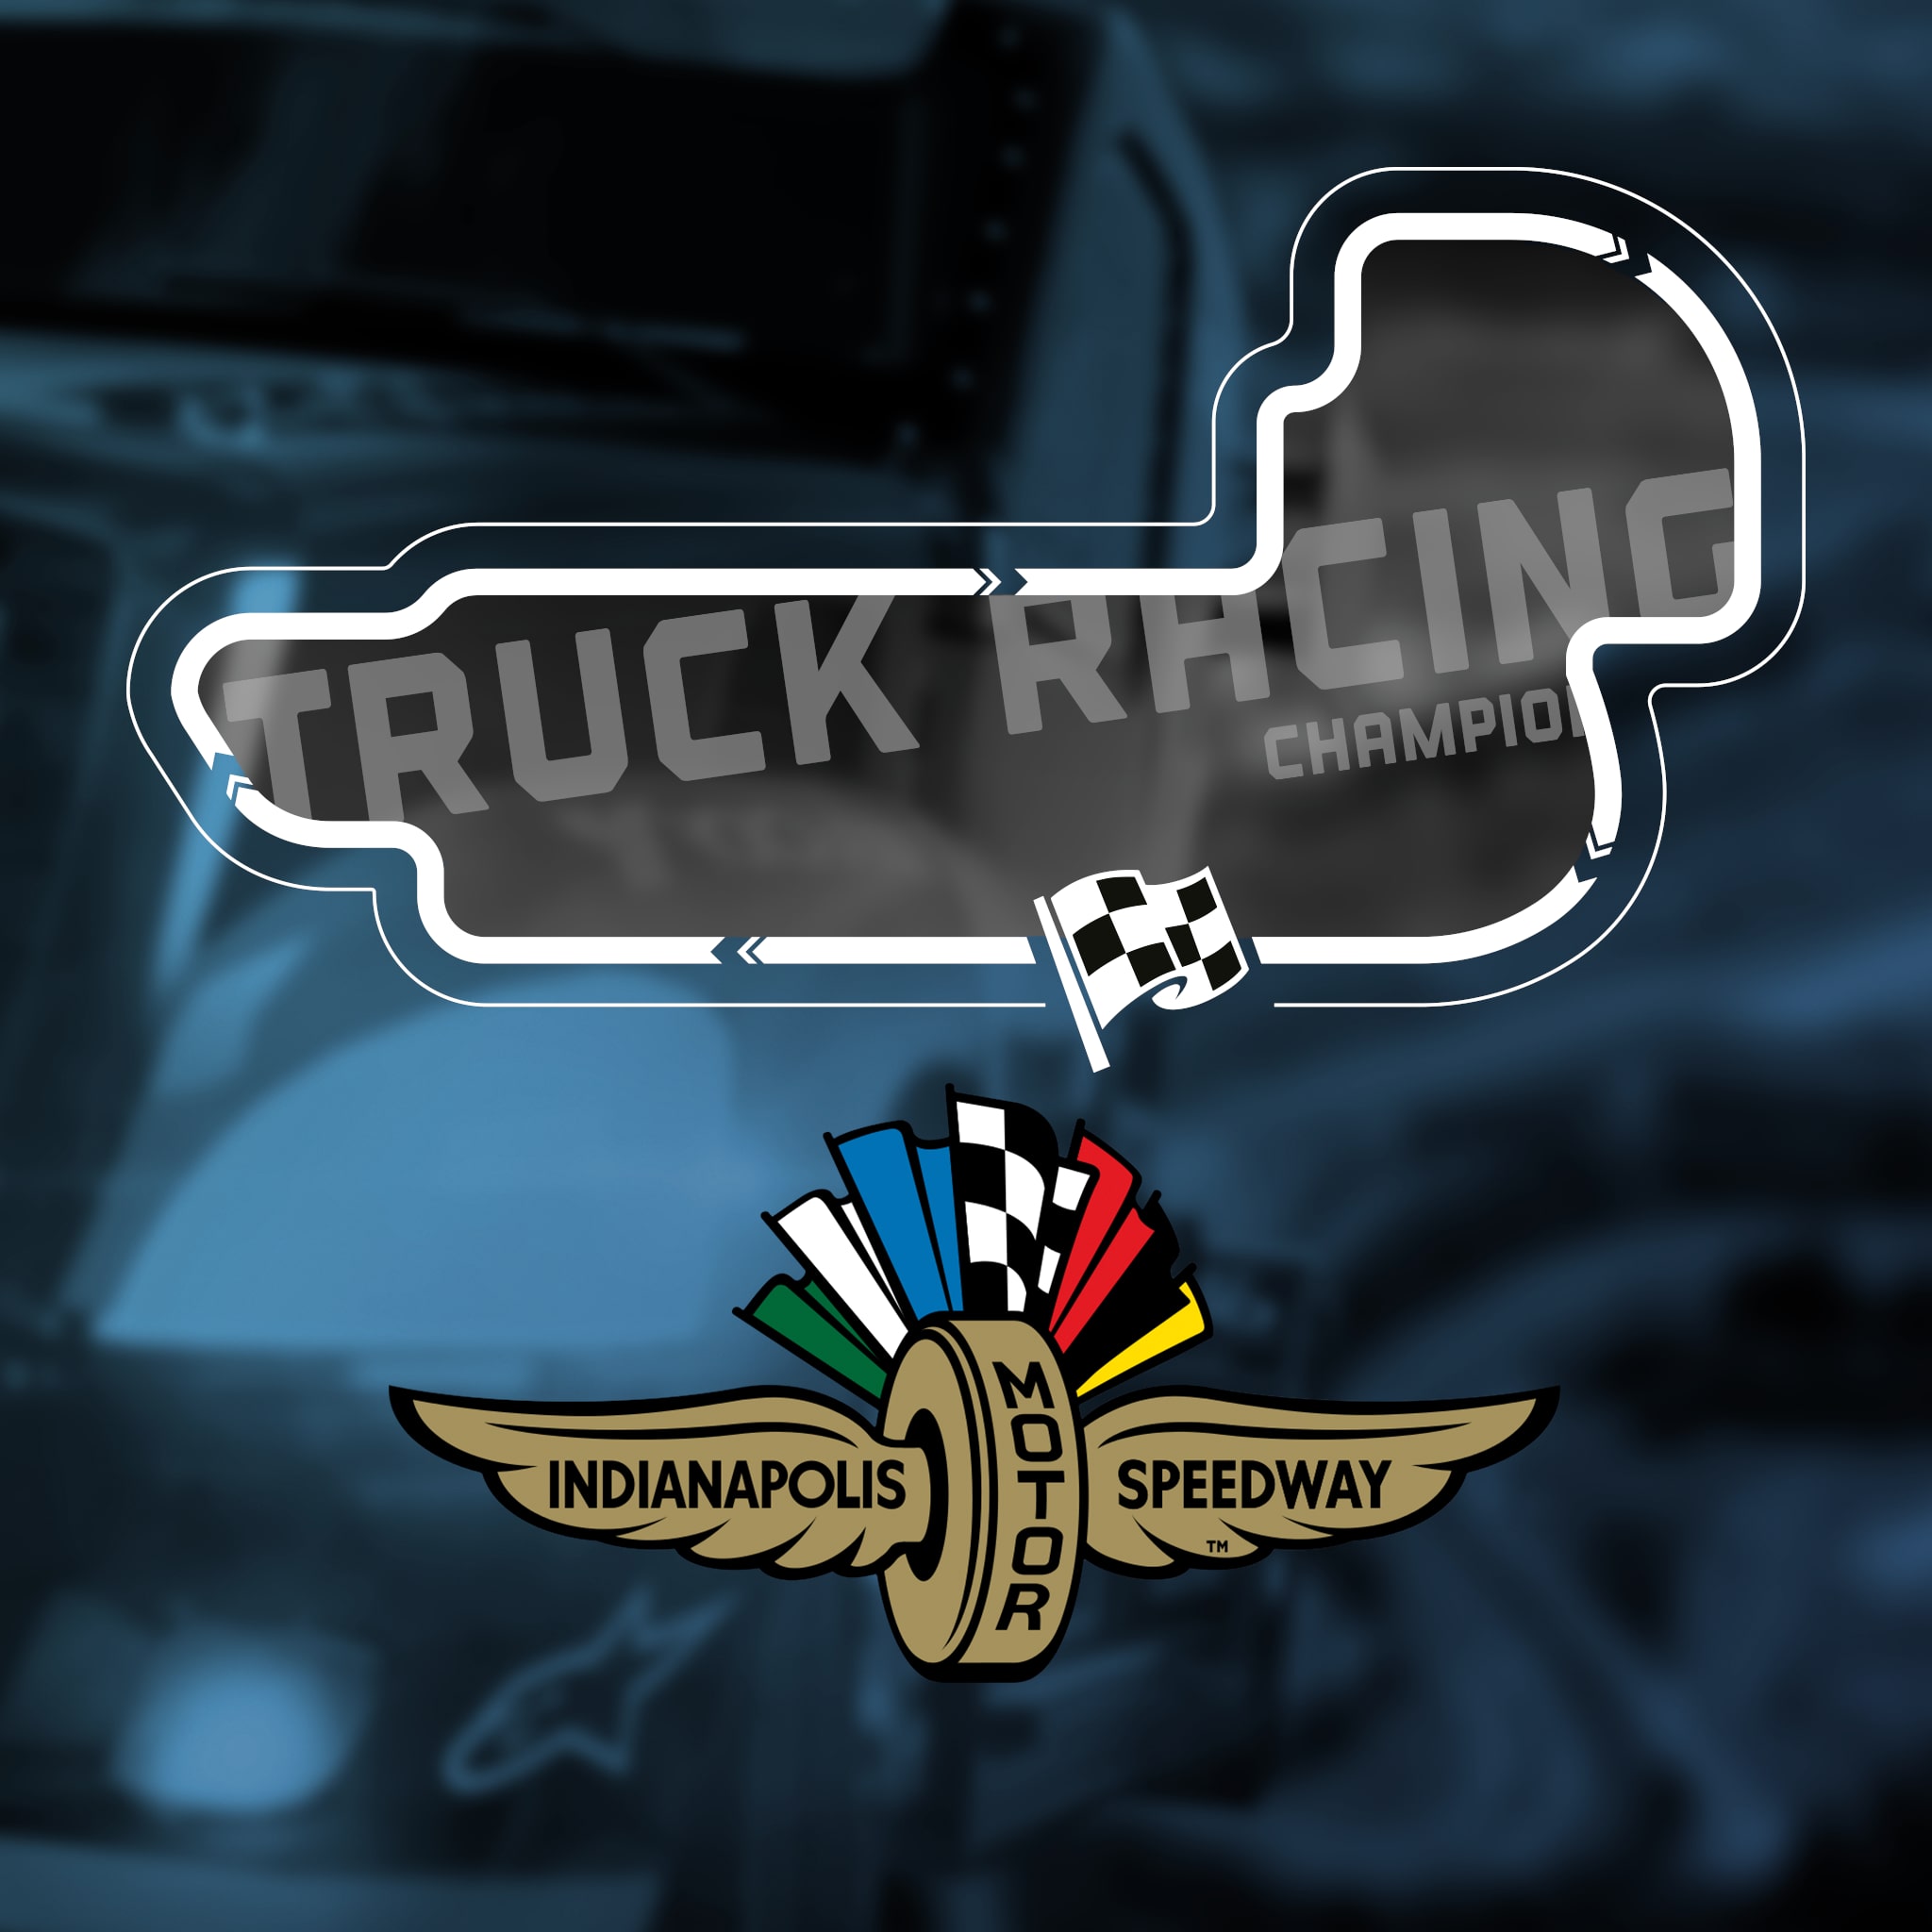 Truck Racing Championship - IndianapolisTrack